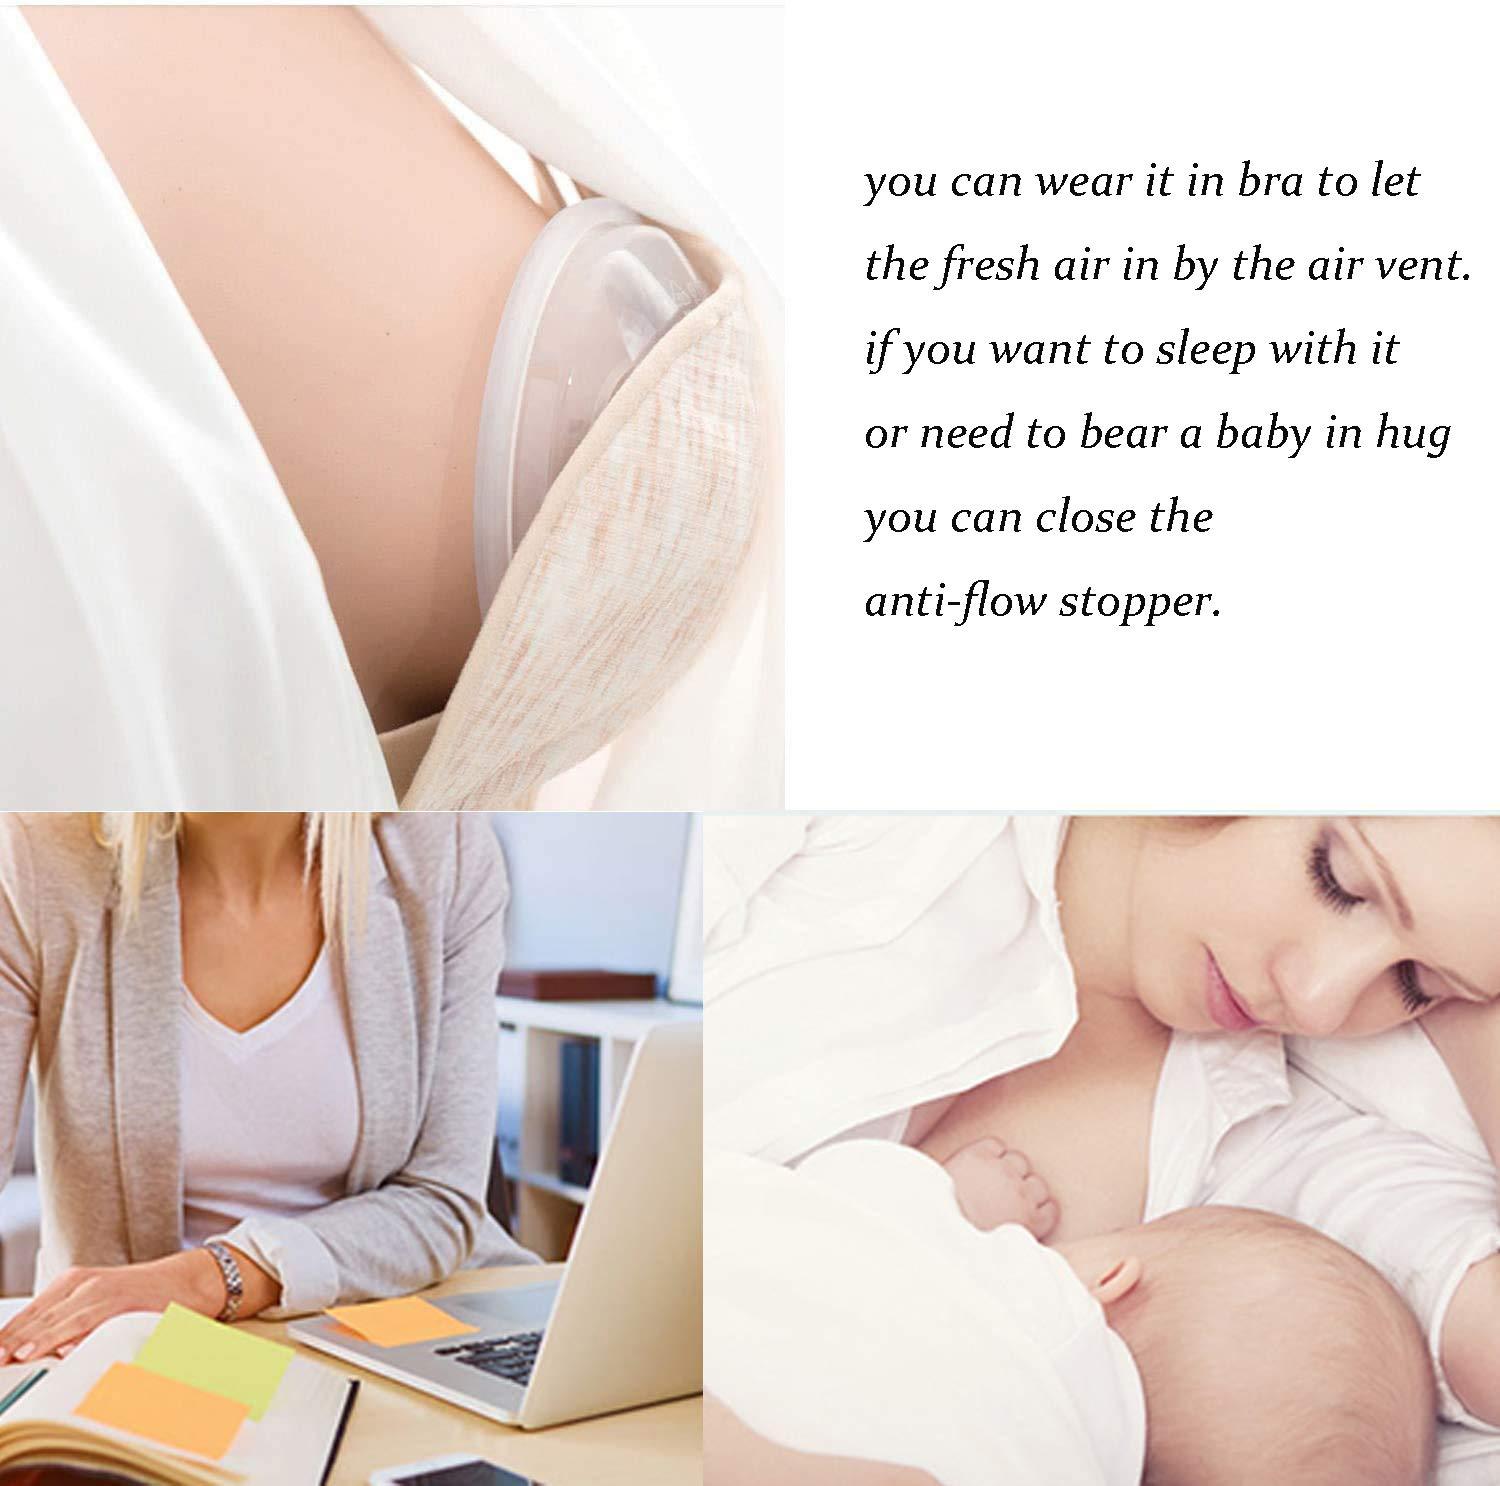 Breast Shells, Milk Saver, Nursing Cups, Nursing Moms to Ease Nipple Pain,  BPA-Free and Reusable, Collect Breast Milk Leak (Pack of 2)